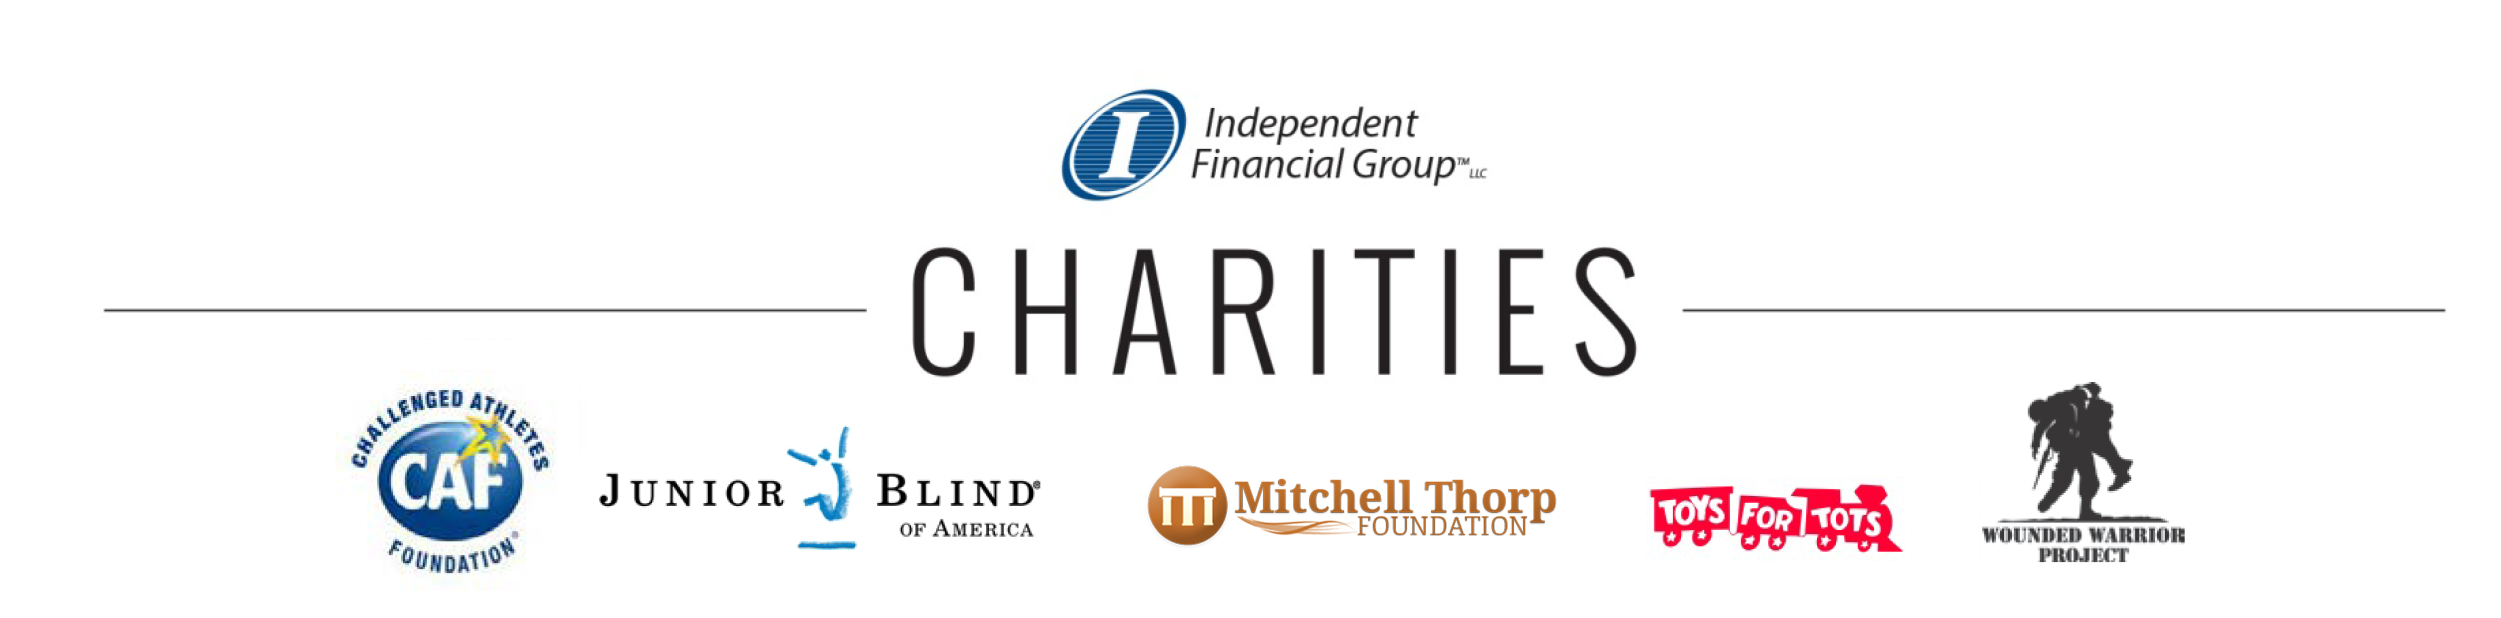 press release - charities - 2015